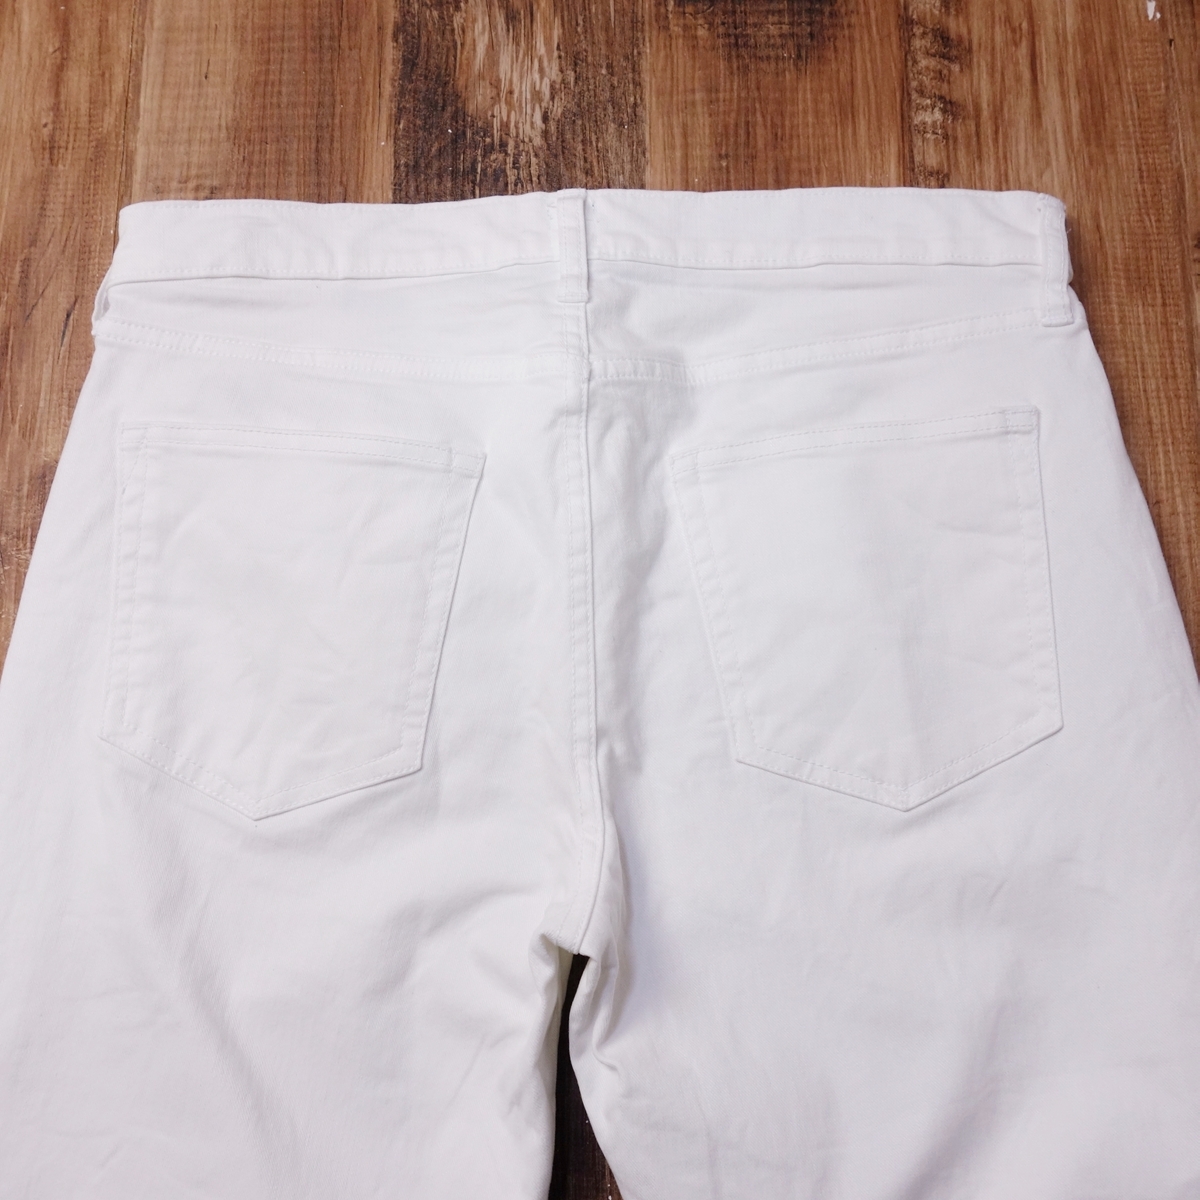 29 -inch jeans lady's GAP GIRLFRIEND old clothes Denim pants white MK9